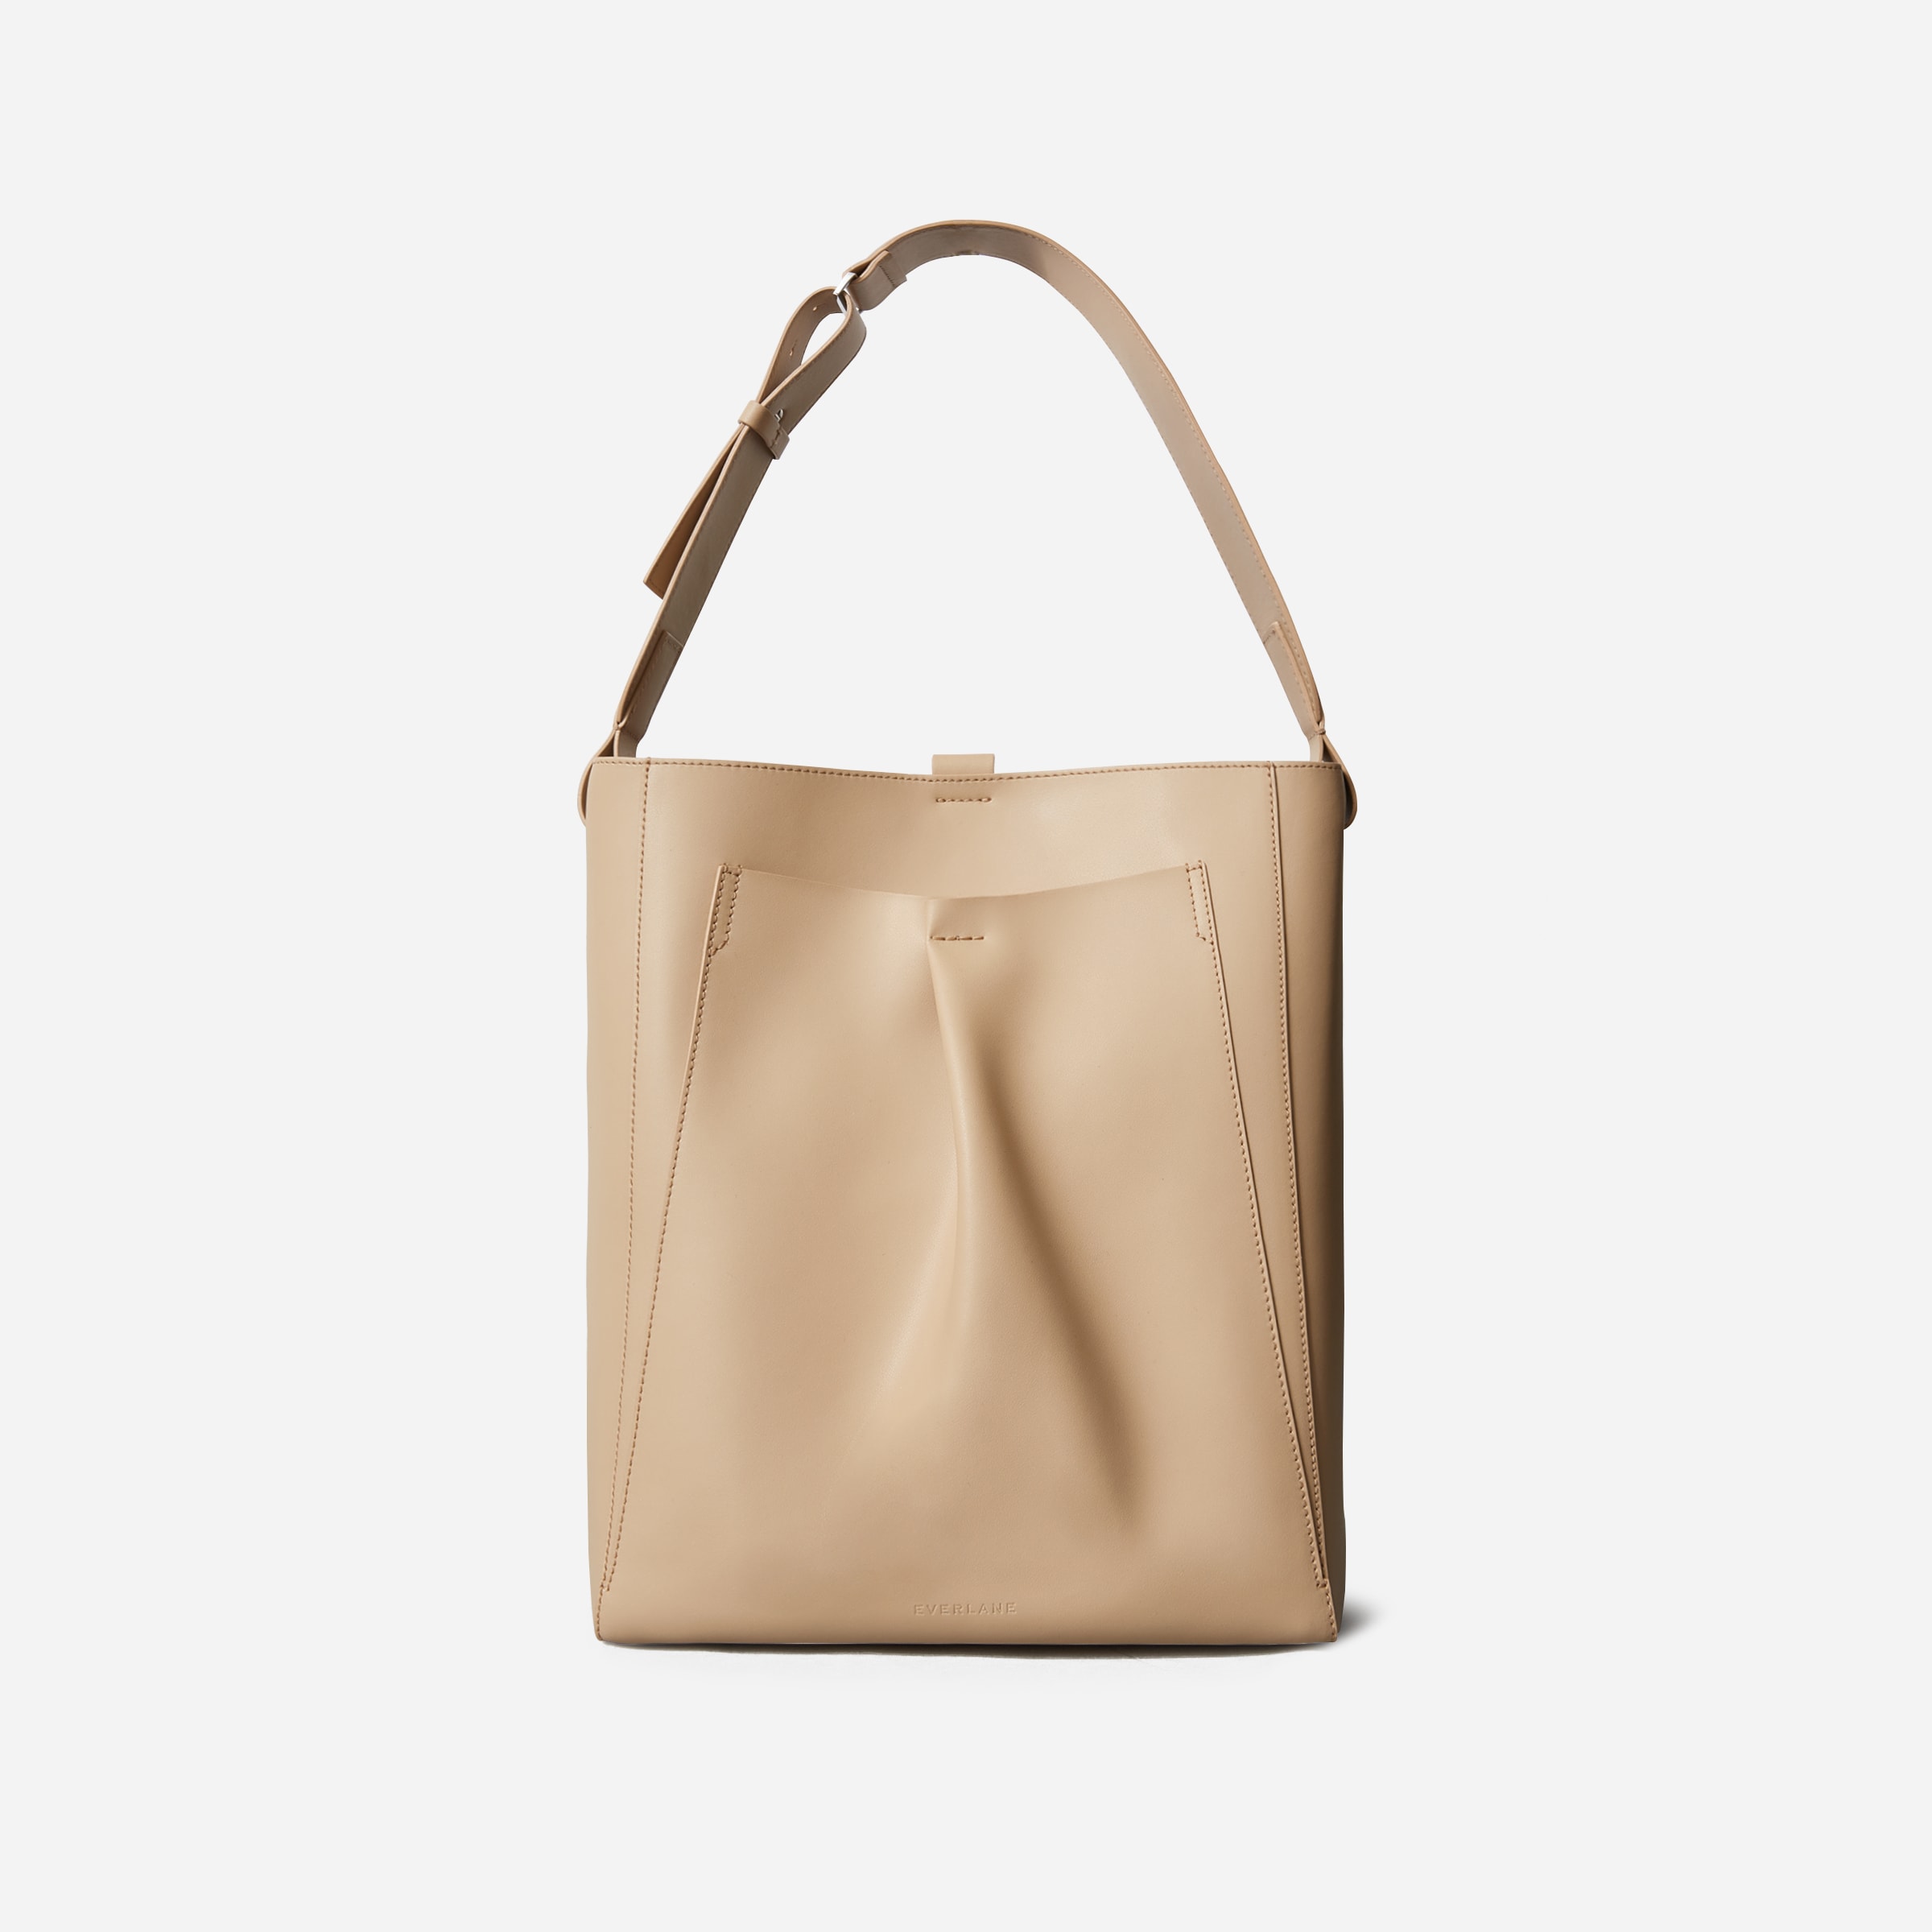 Everlane Women's Luxe Medium Italian Leather Tote Bag